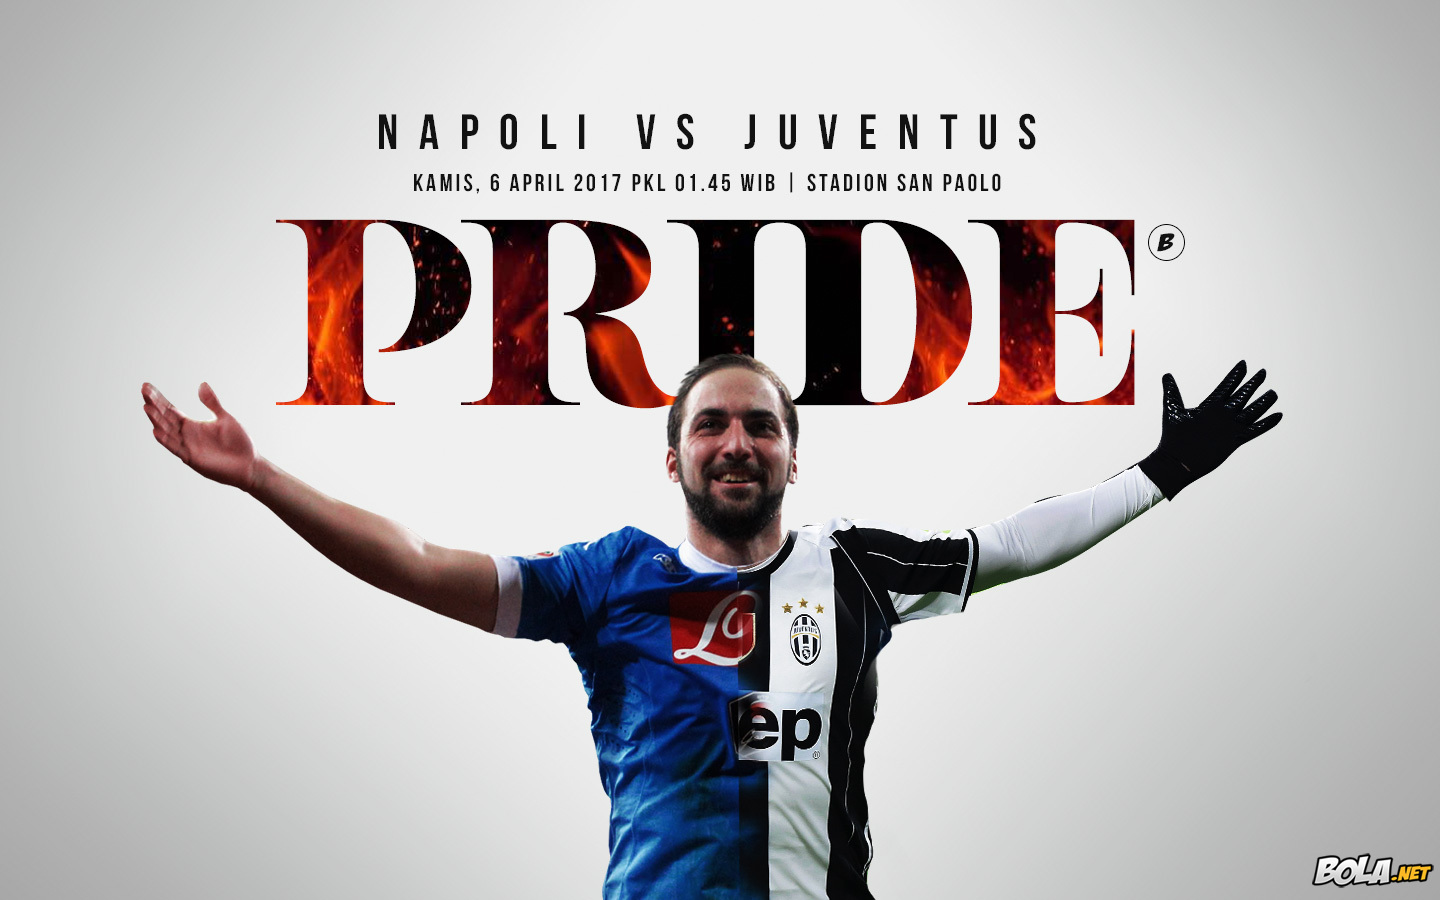 Deskripsi : Wallpaper Napoli Vs Juventus, size: 1440x900